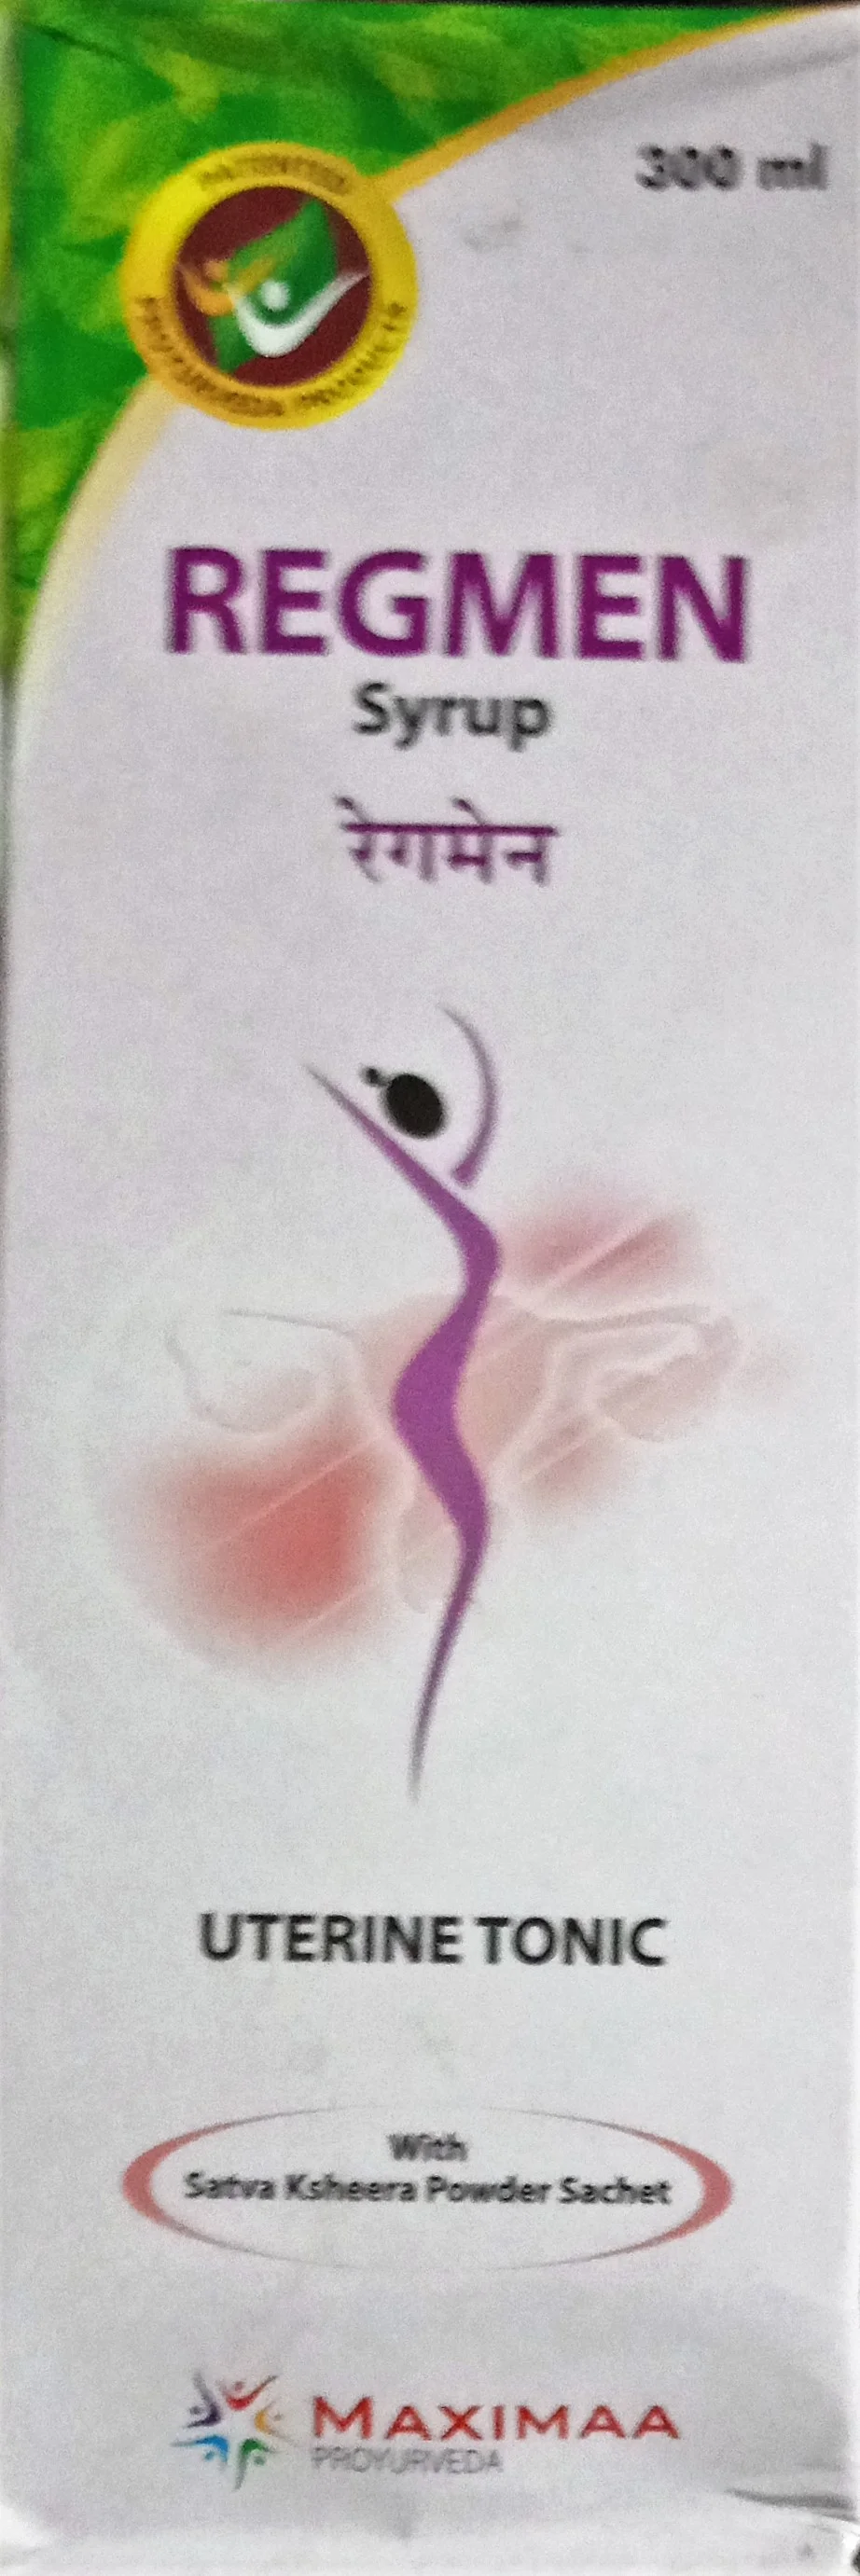 regmen syrup uterine tonic 300ml essenzaa nutrition pvt ltd